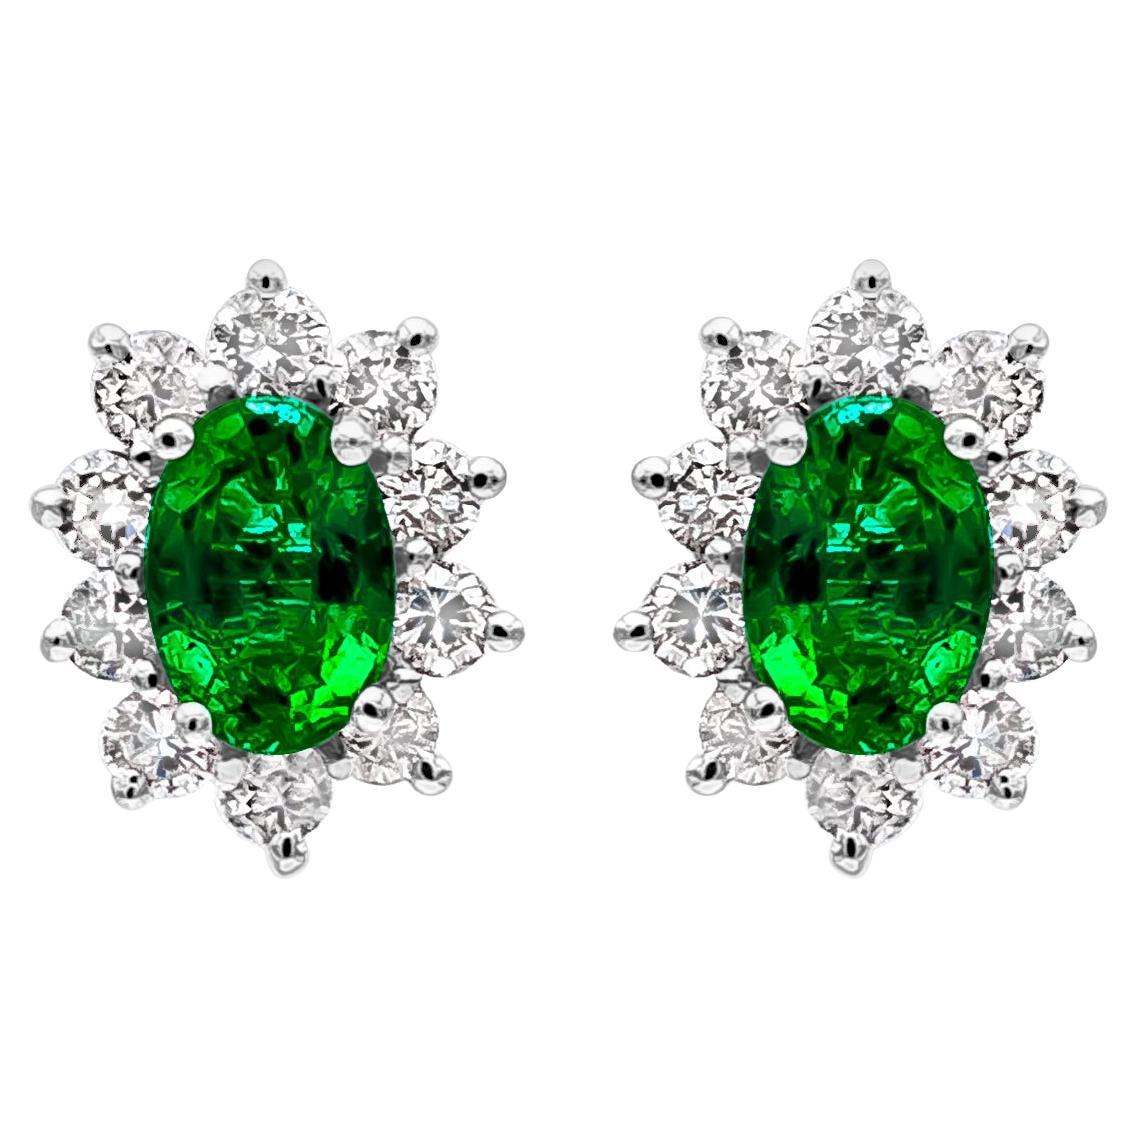 Roman Malakov 1.37 Carat Total Green Emerald and Diamond Halo Stud Earrings For Sale